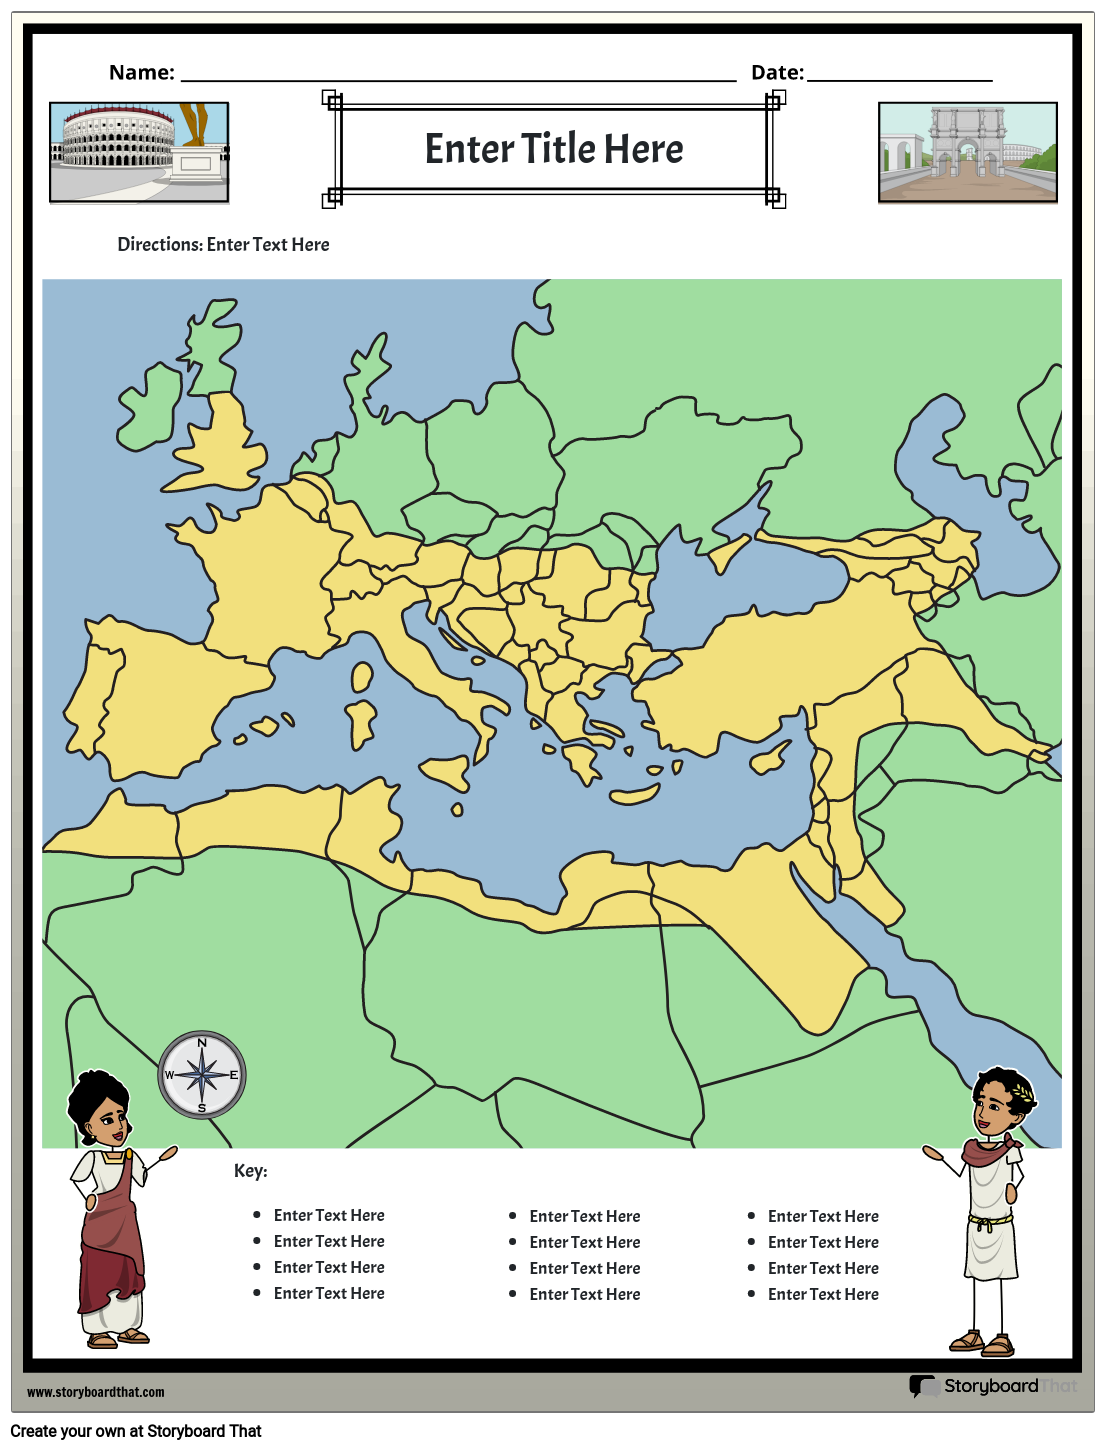 Carte de L'empire Romain